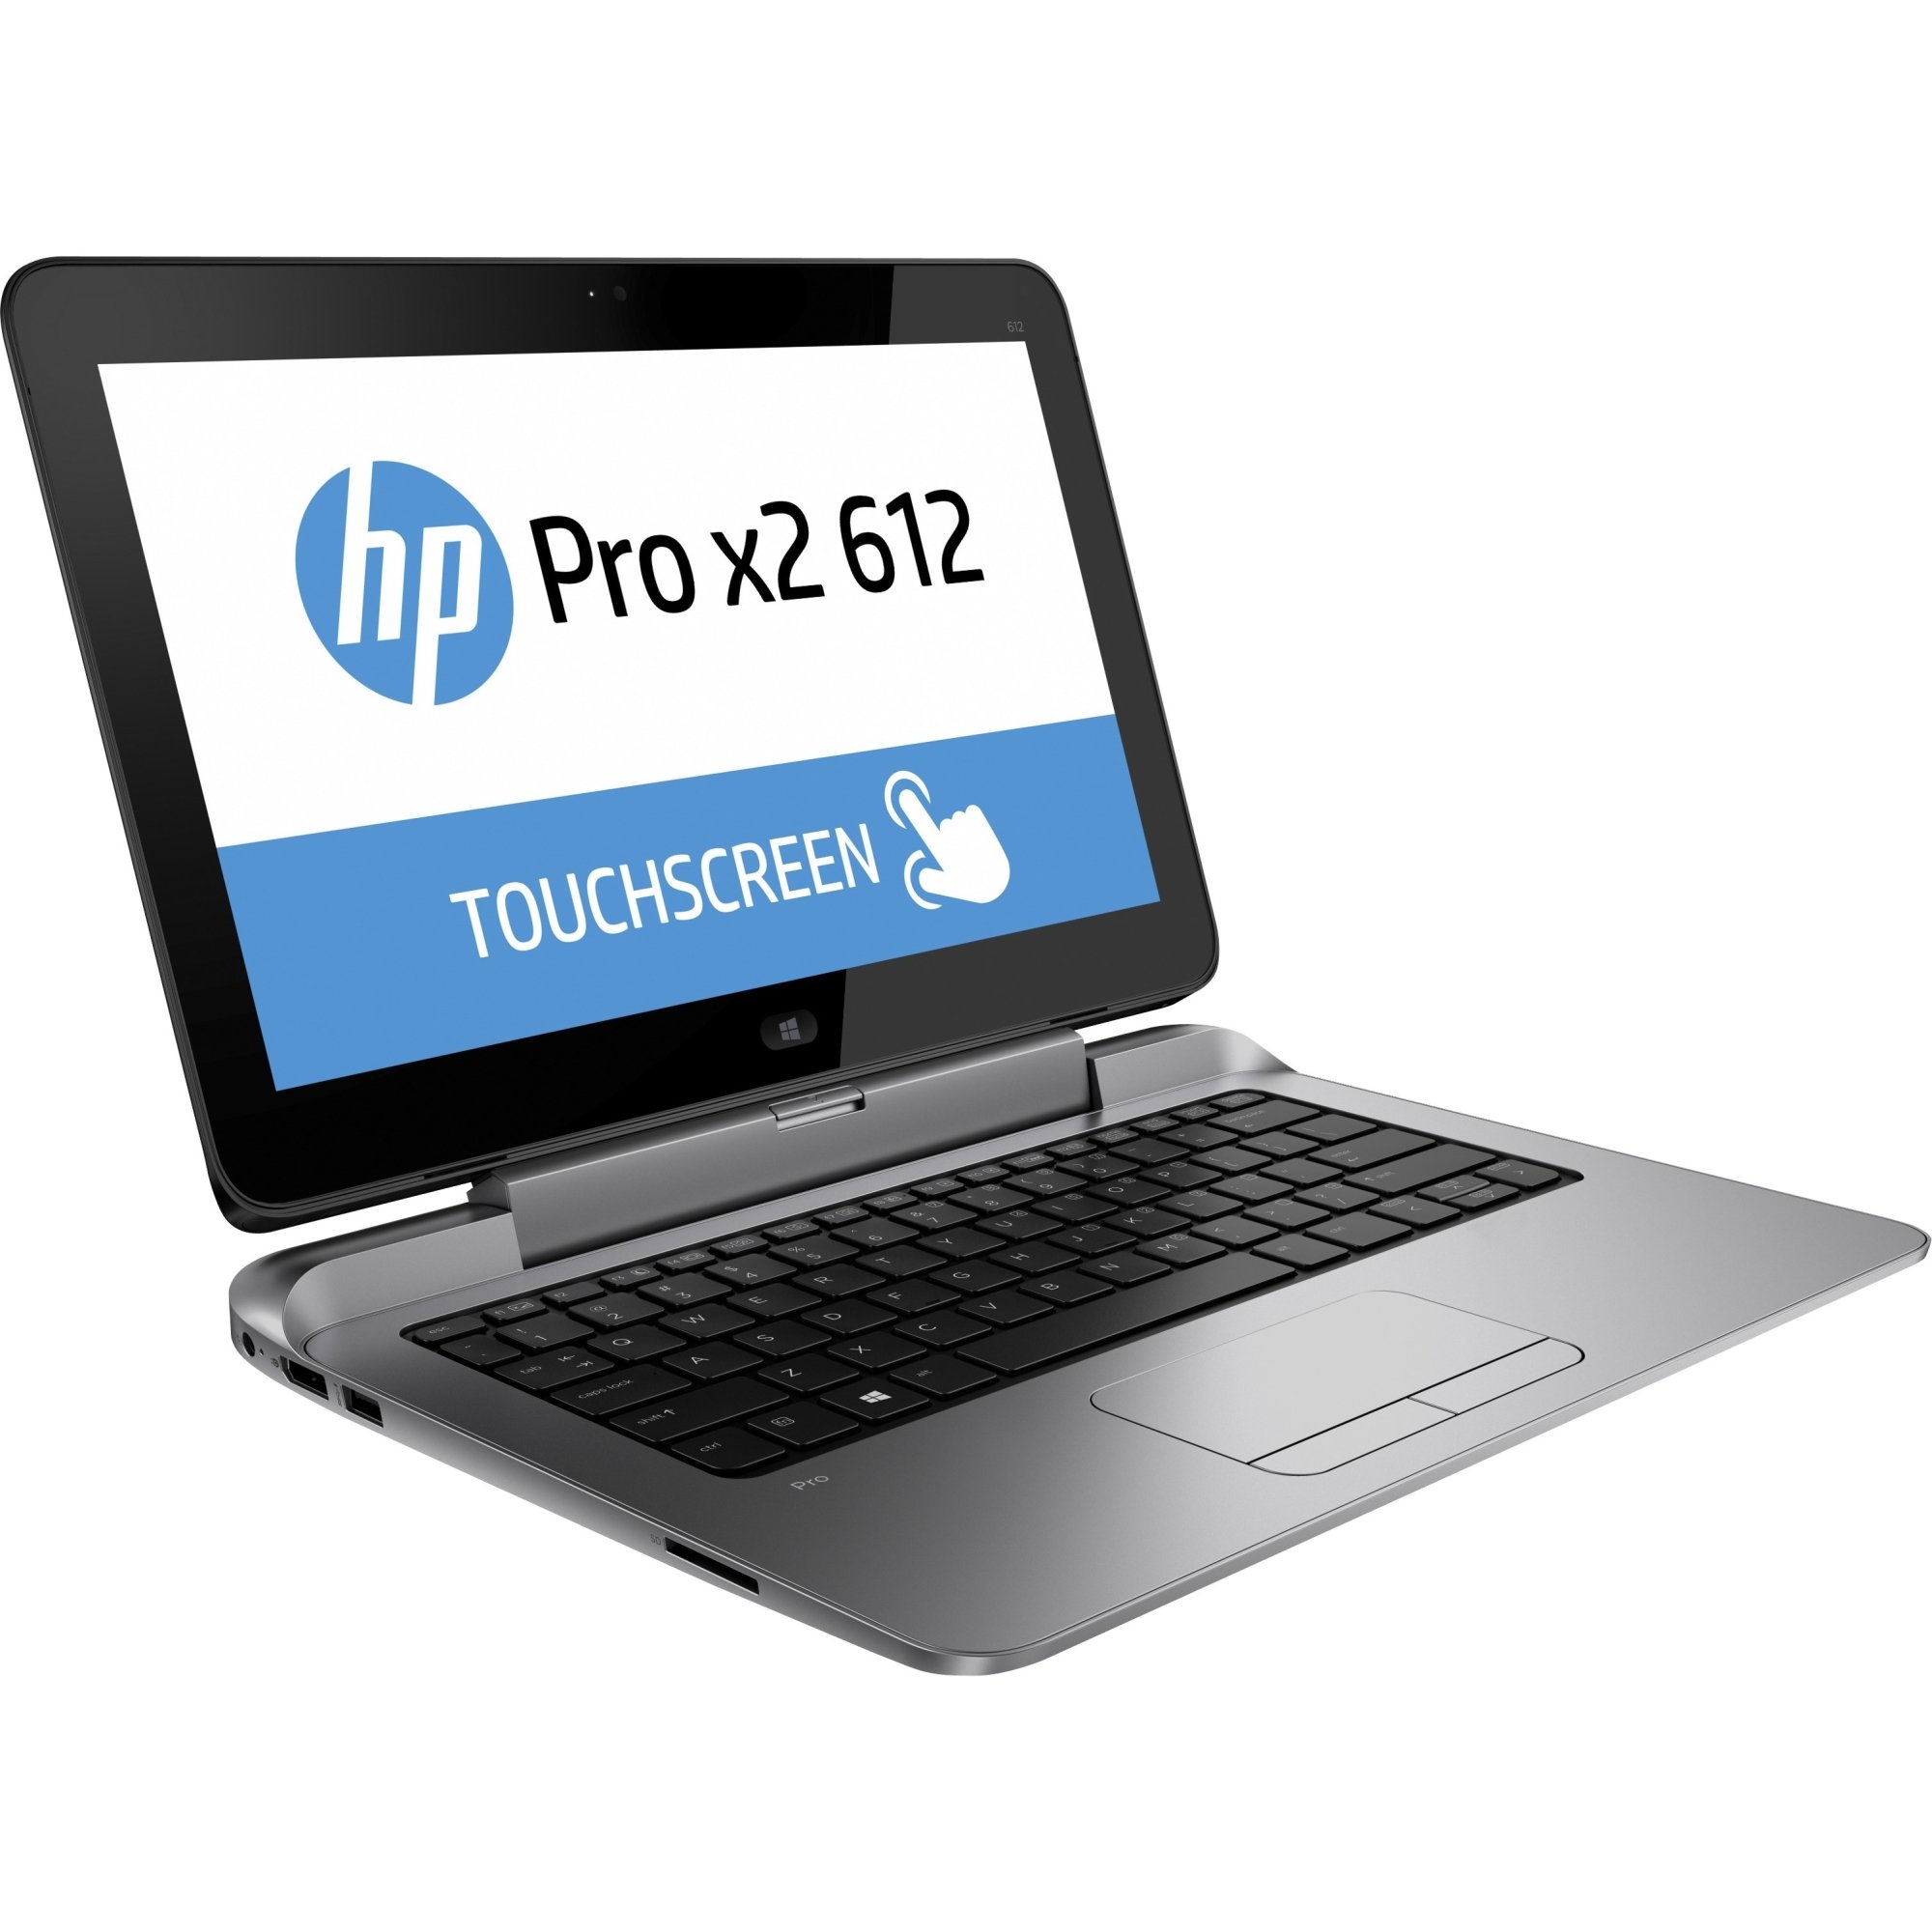 Pro x2 612 G1 Tablet